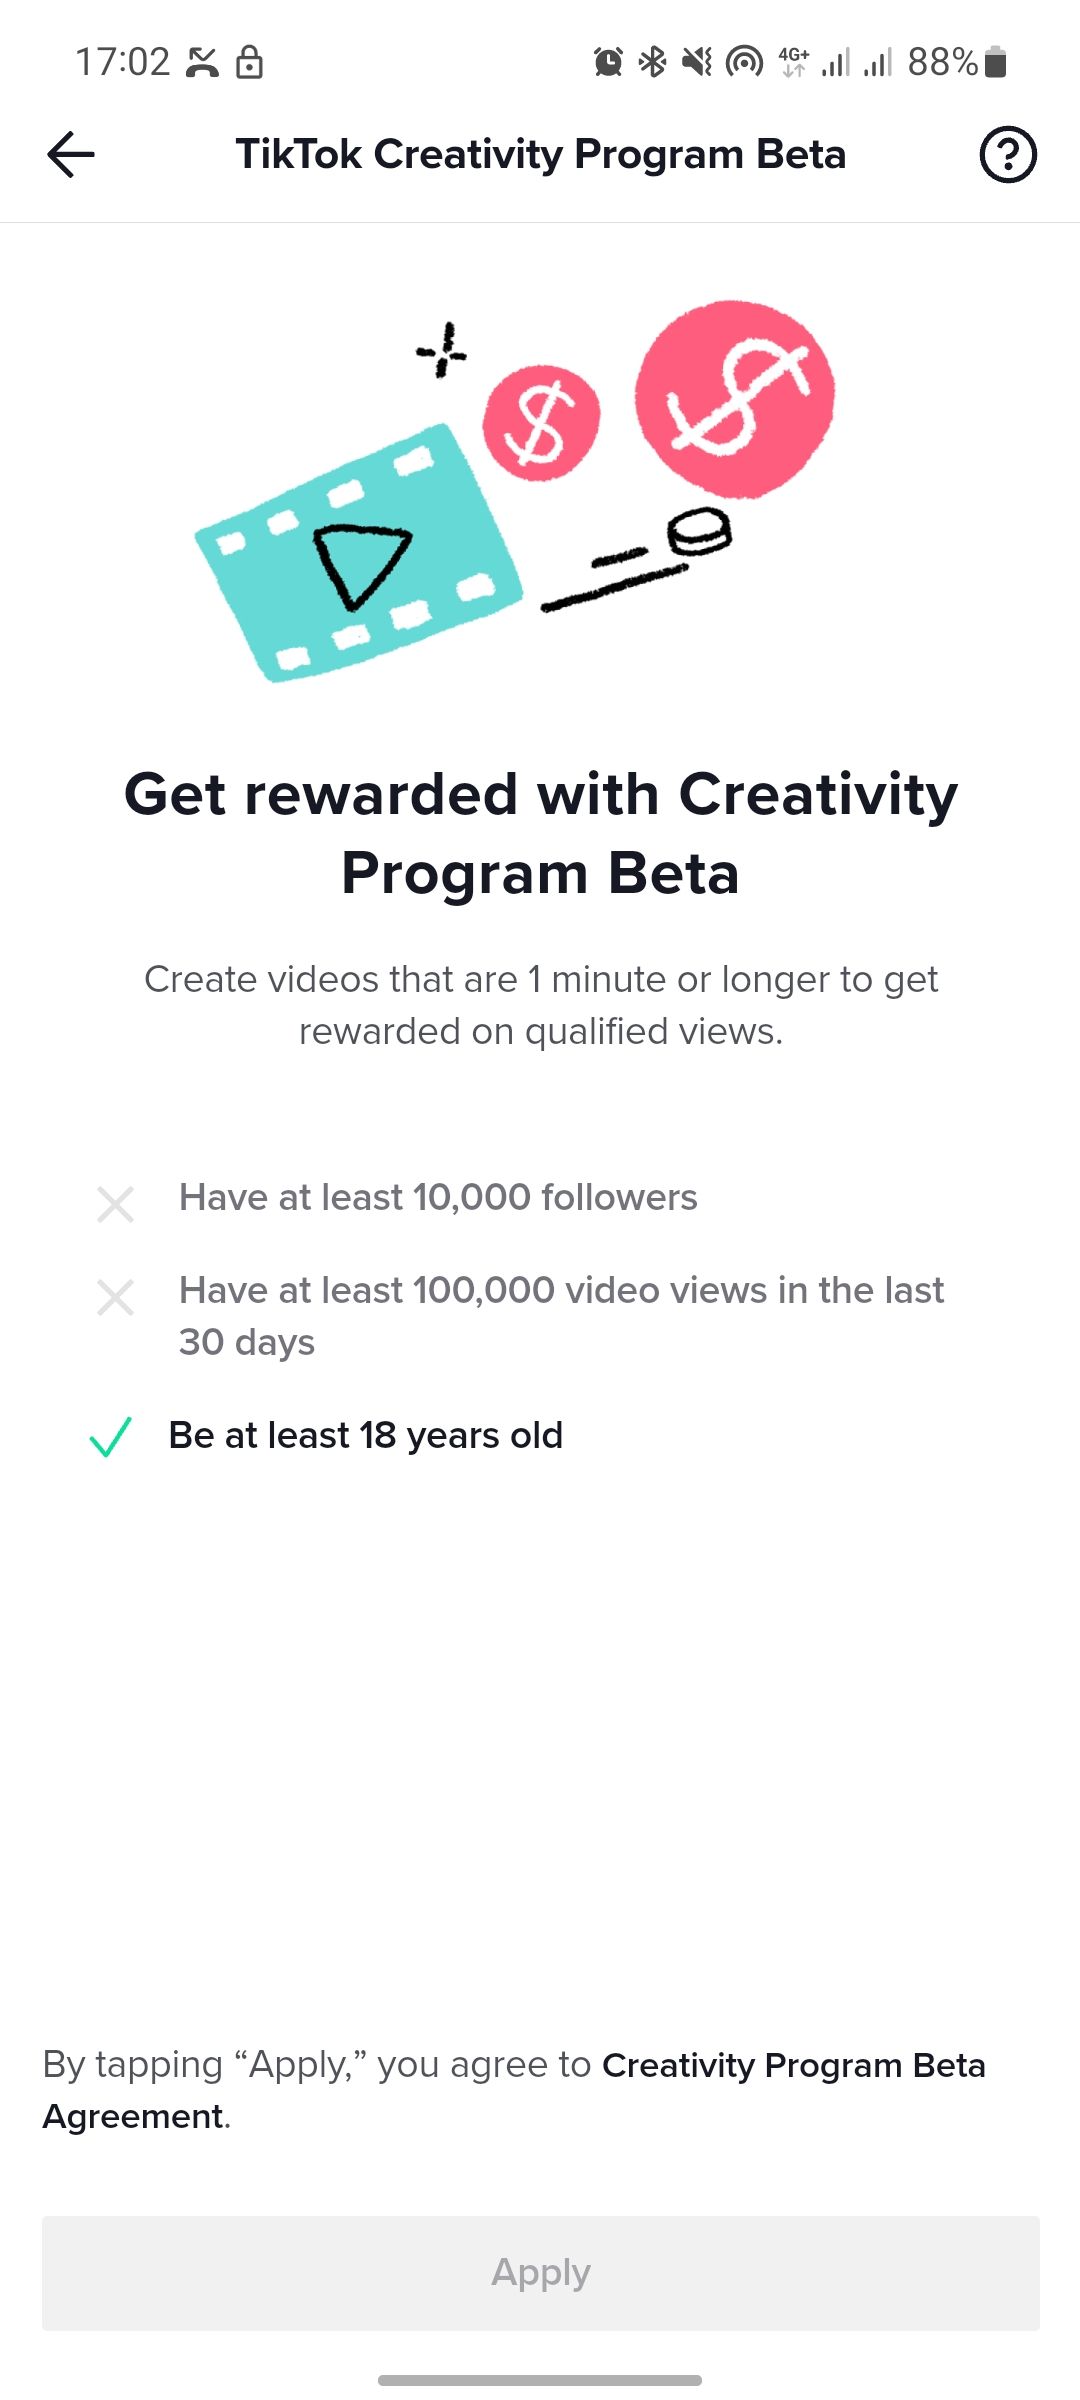 How to Apply for TikTok's $1 Billion Creativity Program